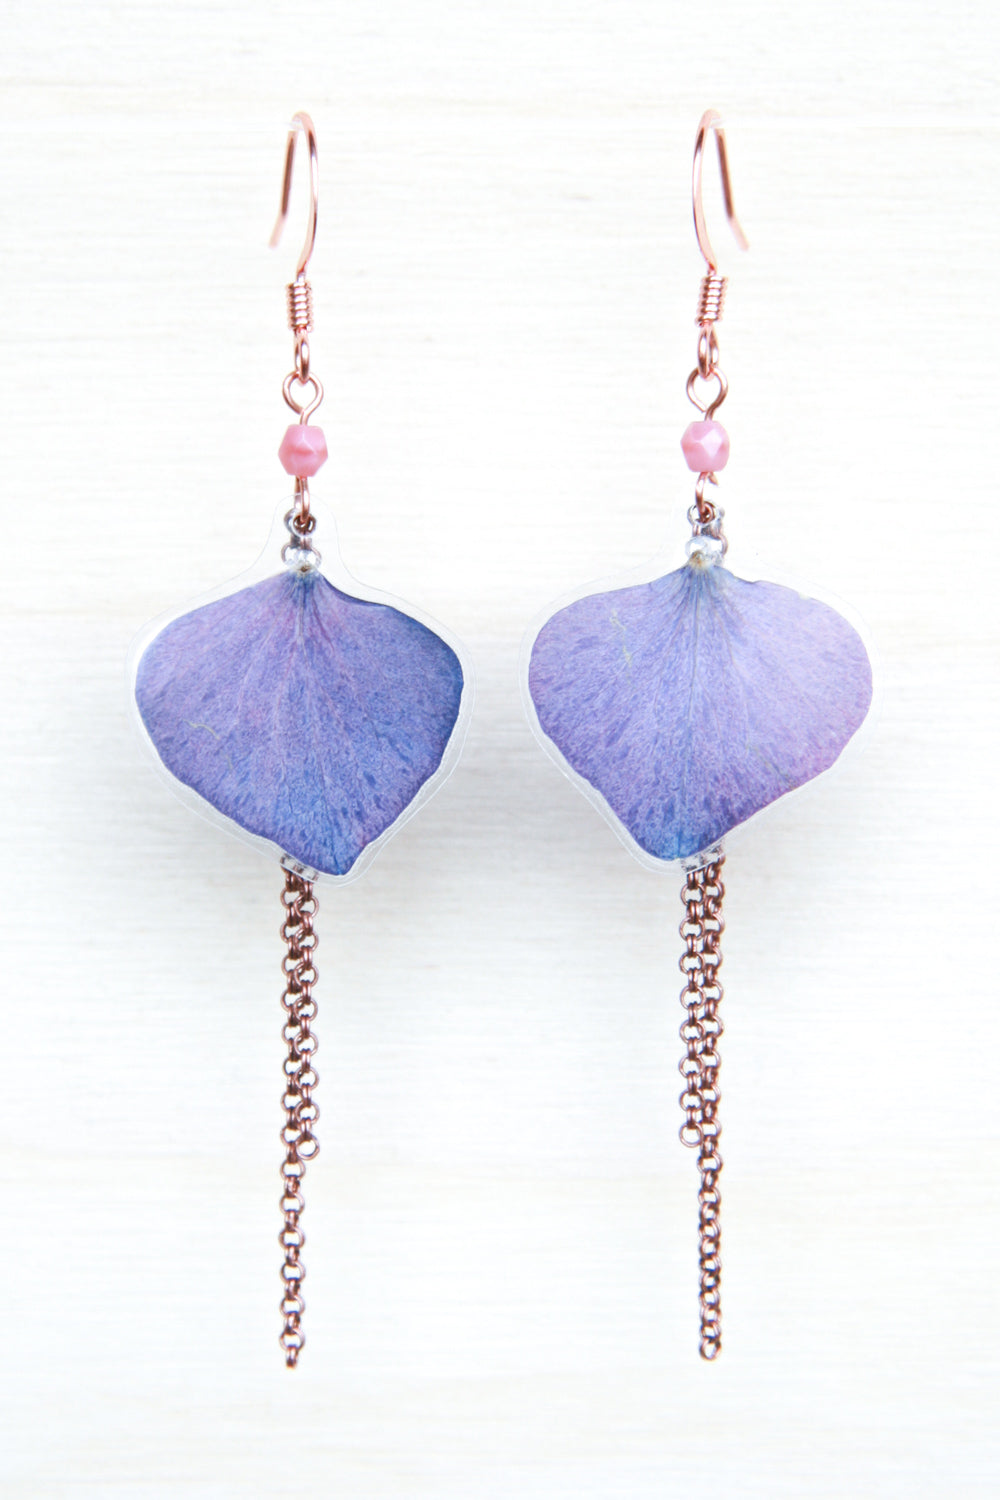 Purple Hydrangea Pressed Petal Earrings with Pink Glass Beads & Double Rolo Dangles